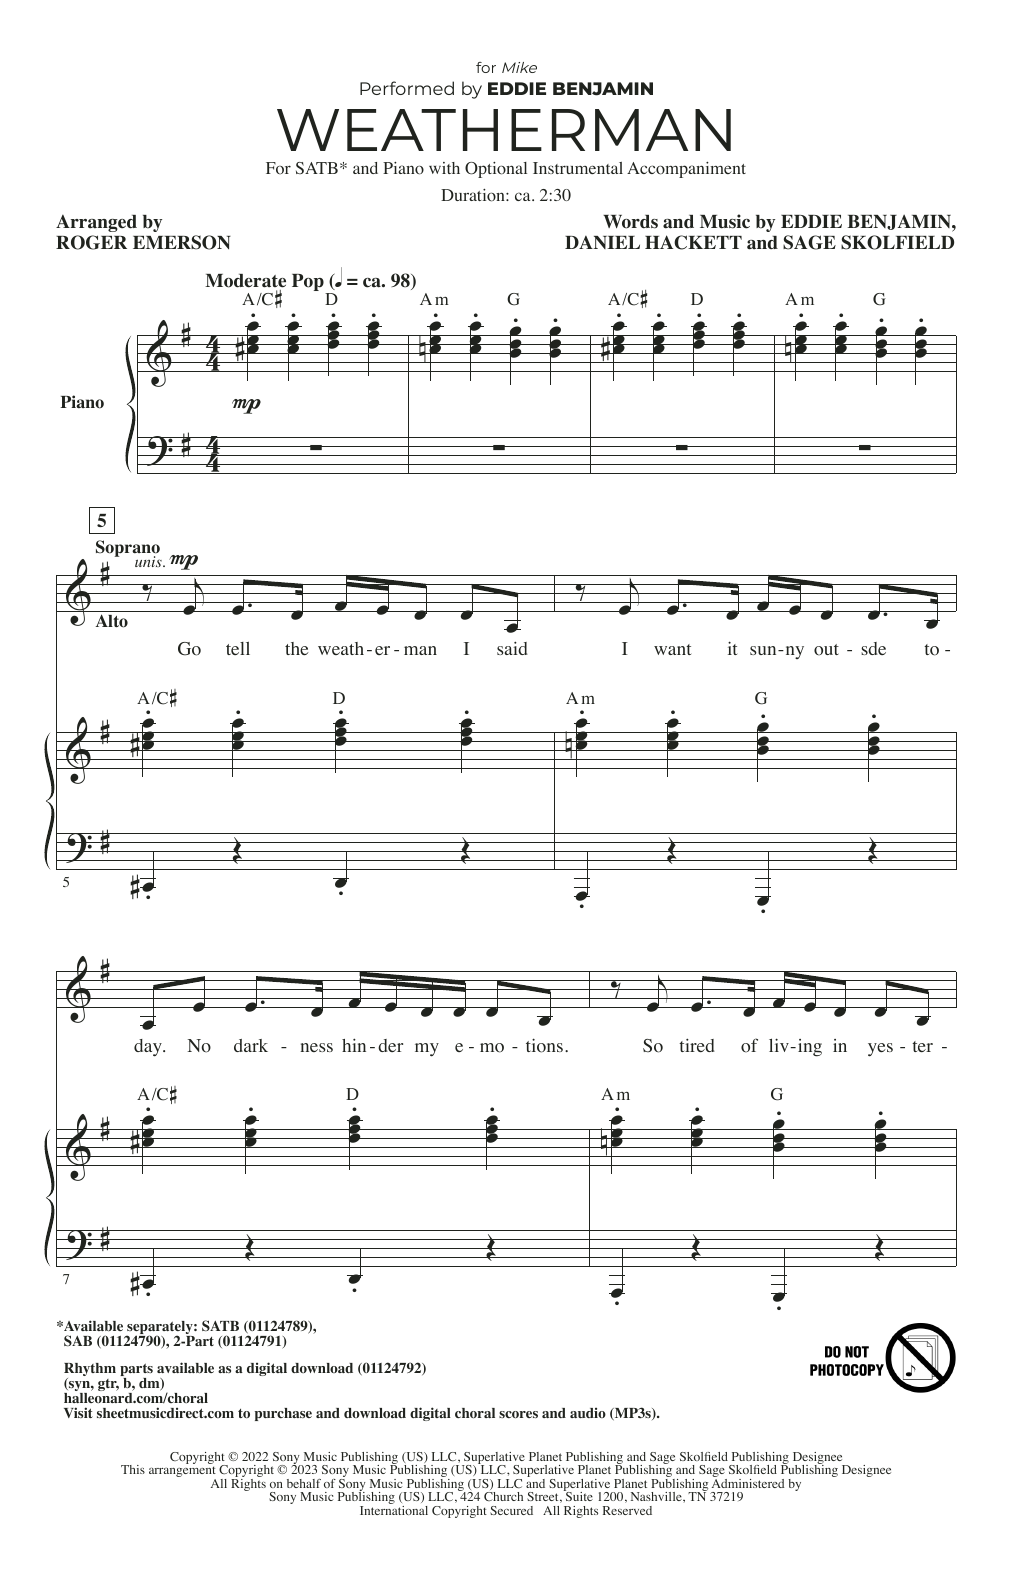 Eddie Benjamin Weatherman (arr. Roger Emerson) Sheet Music Notes & Chords for SAB Choir - Download or Print PDF